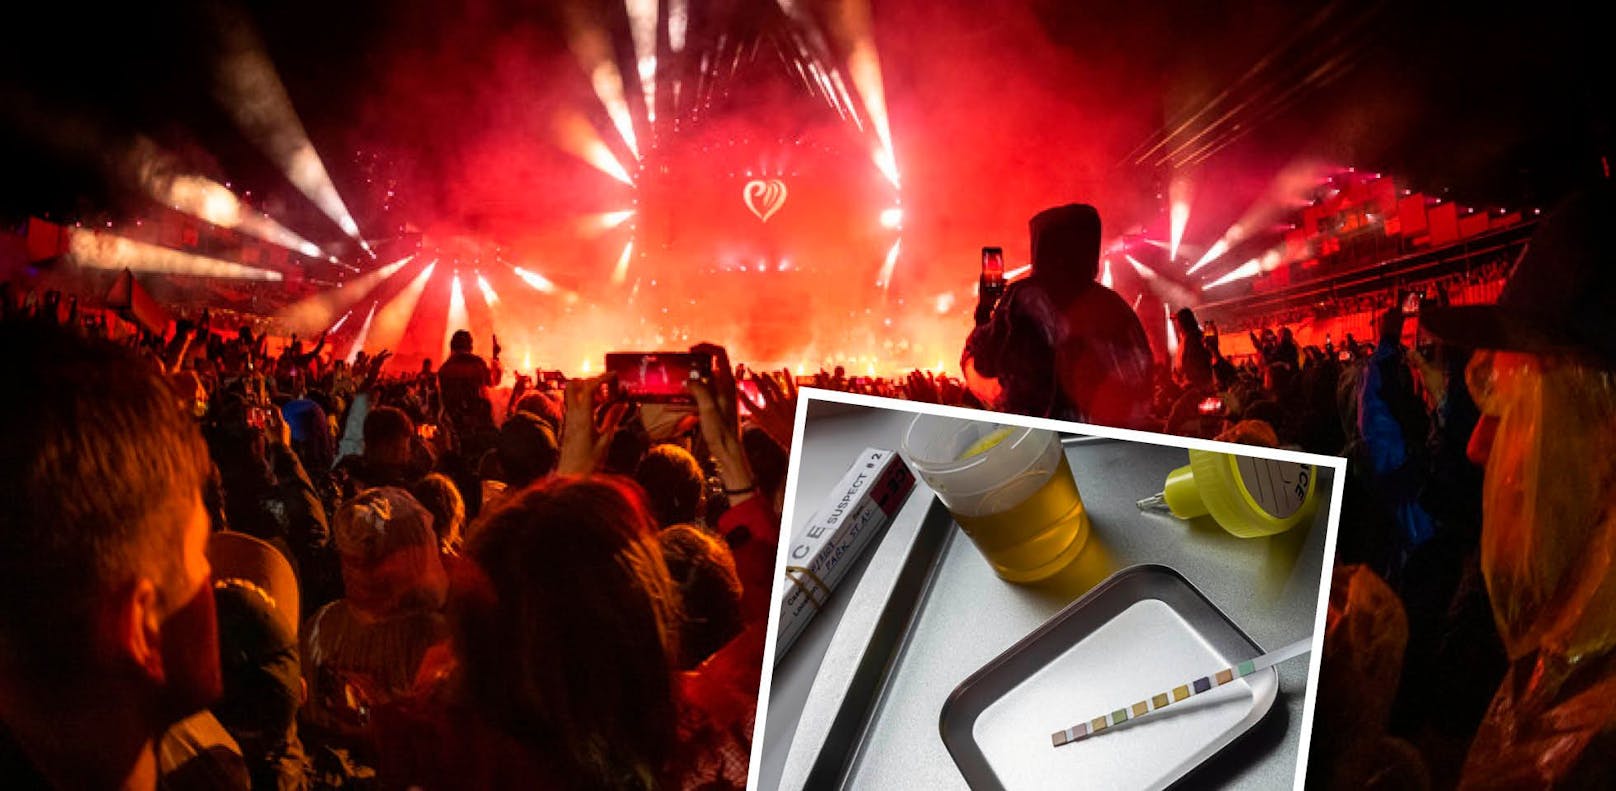 22 Drogenlenker bei "Electric Love Festival" erwischt